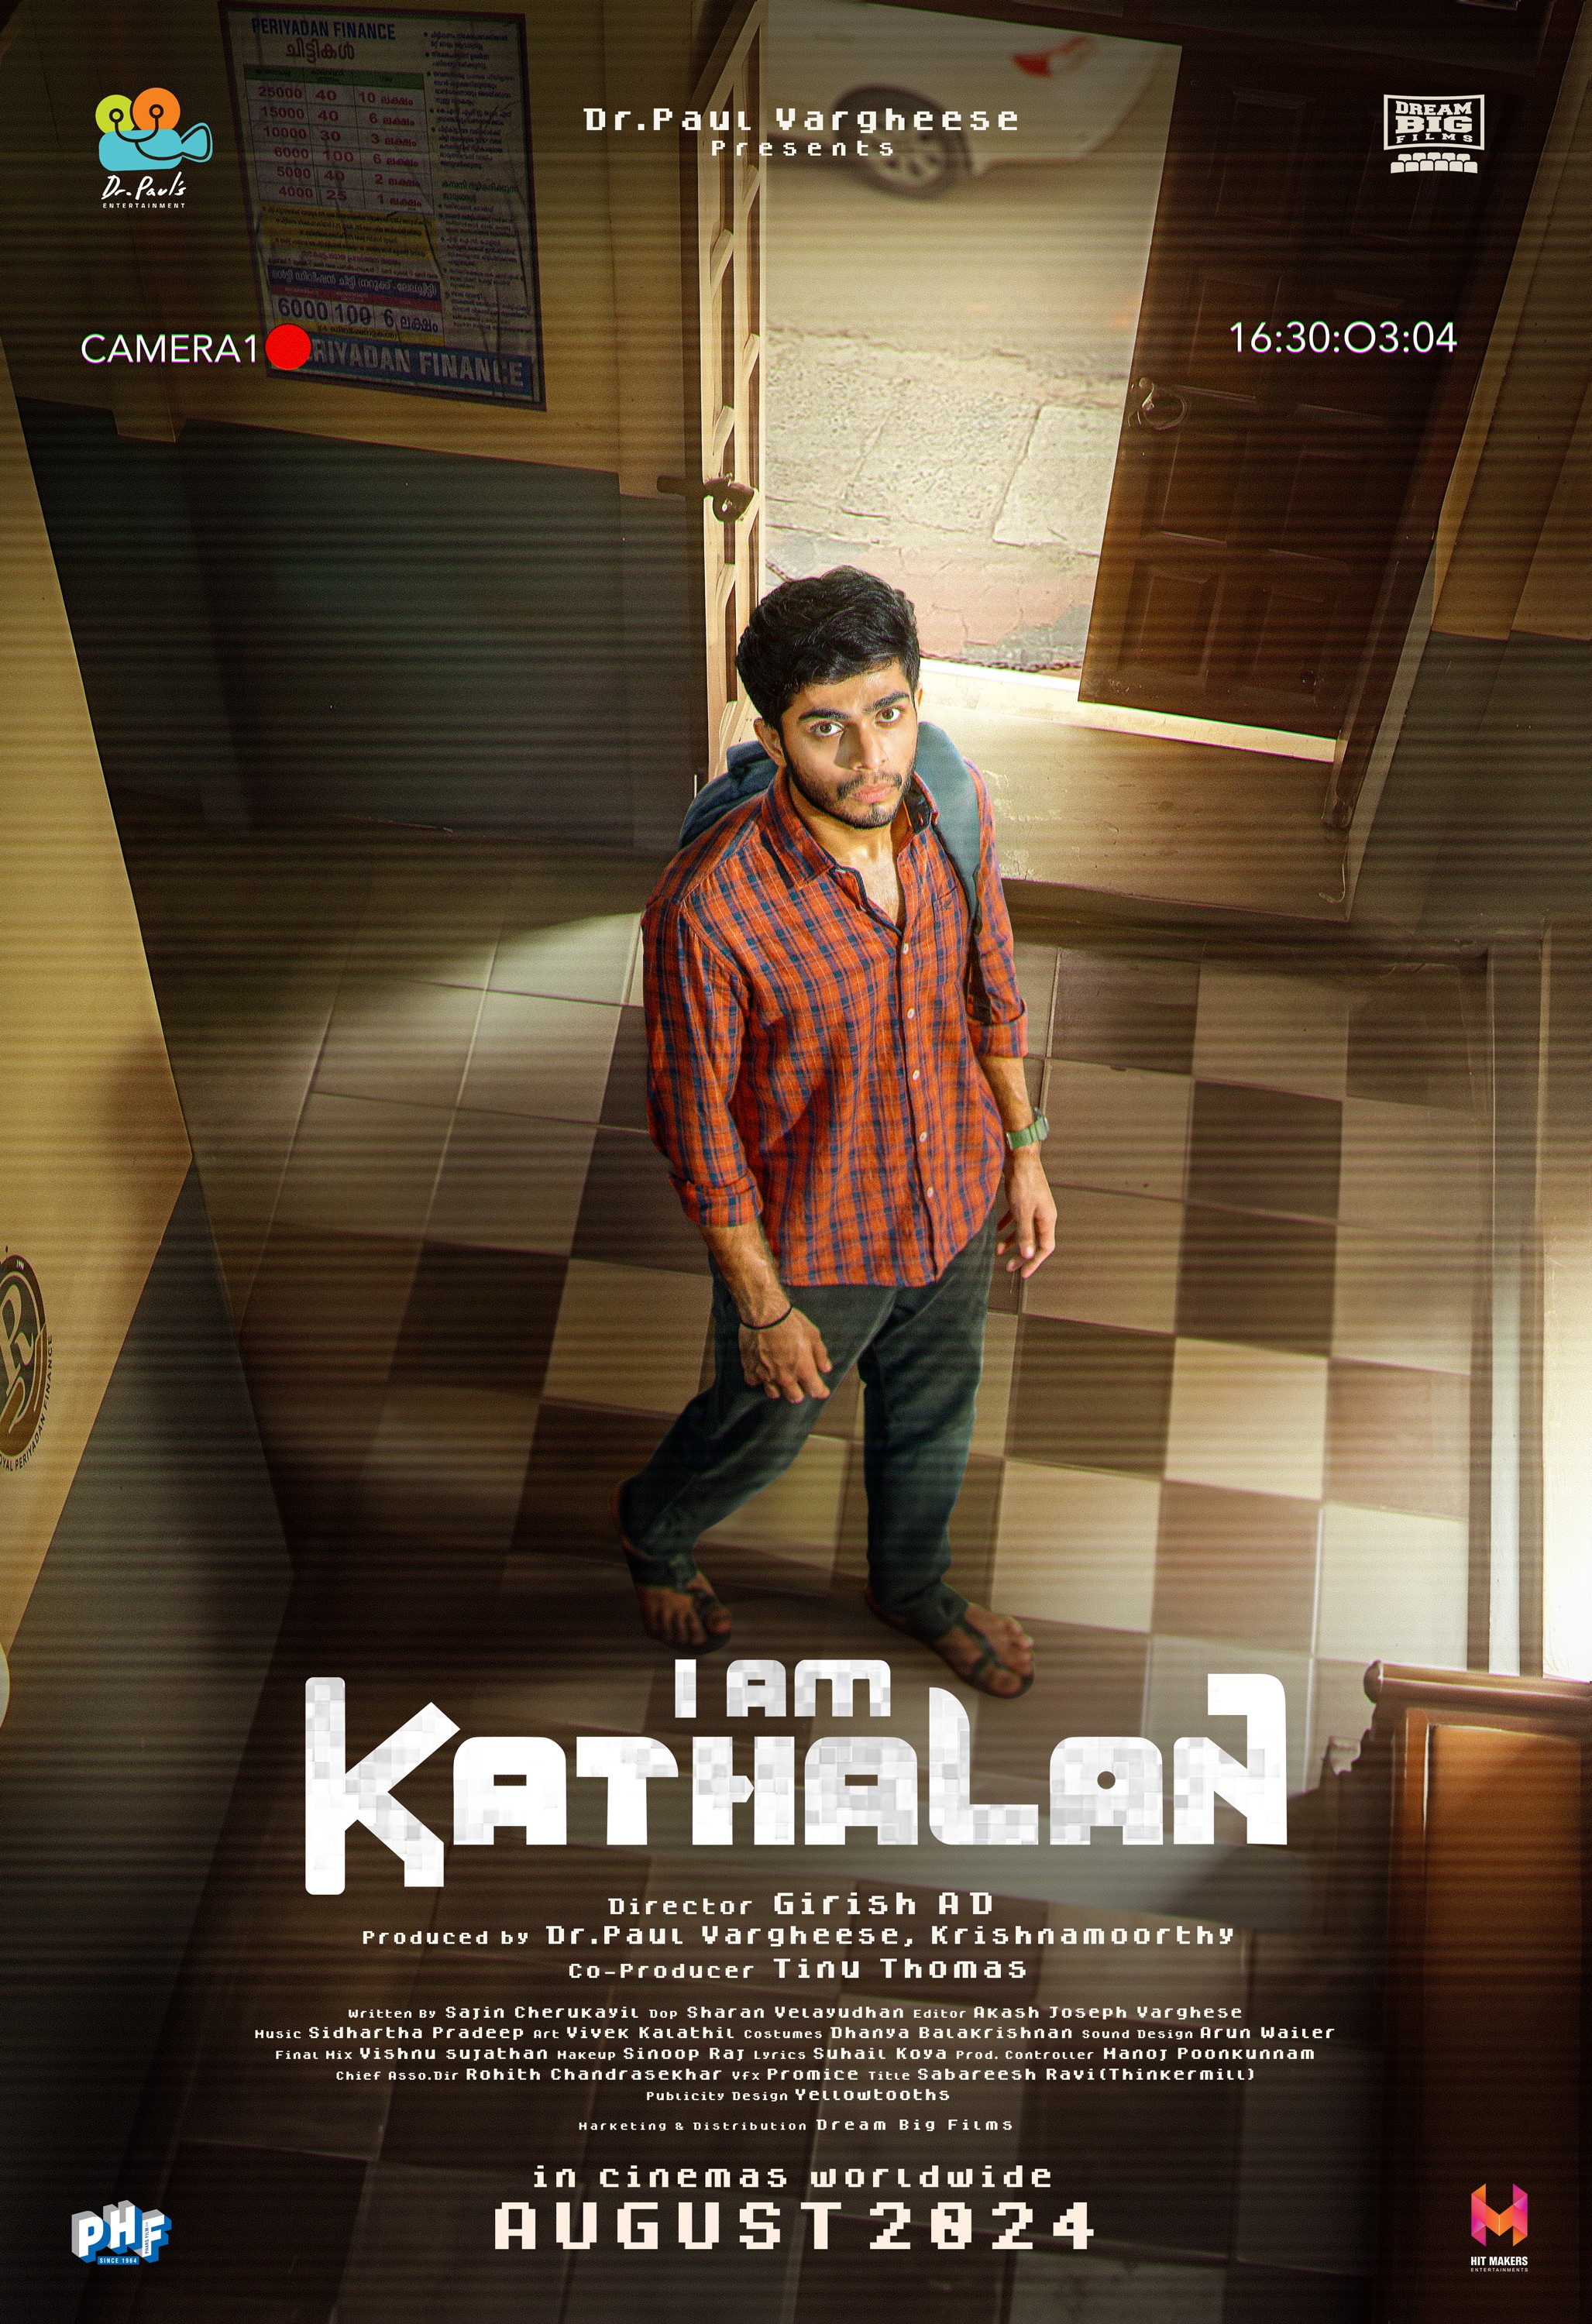 I AM KATHALAN